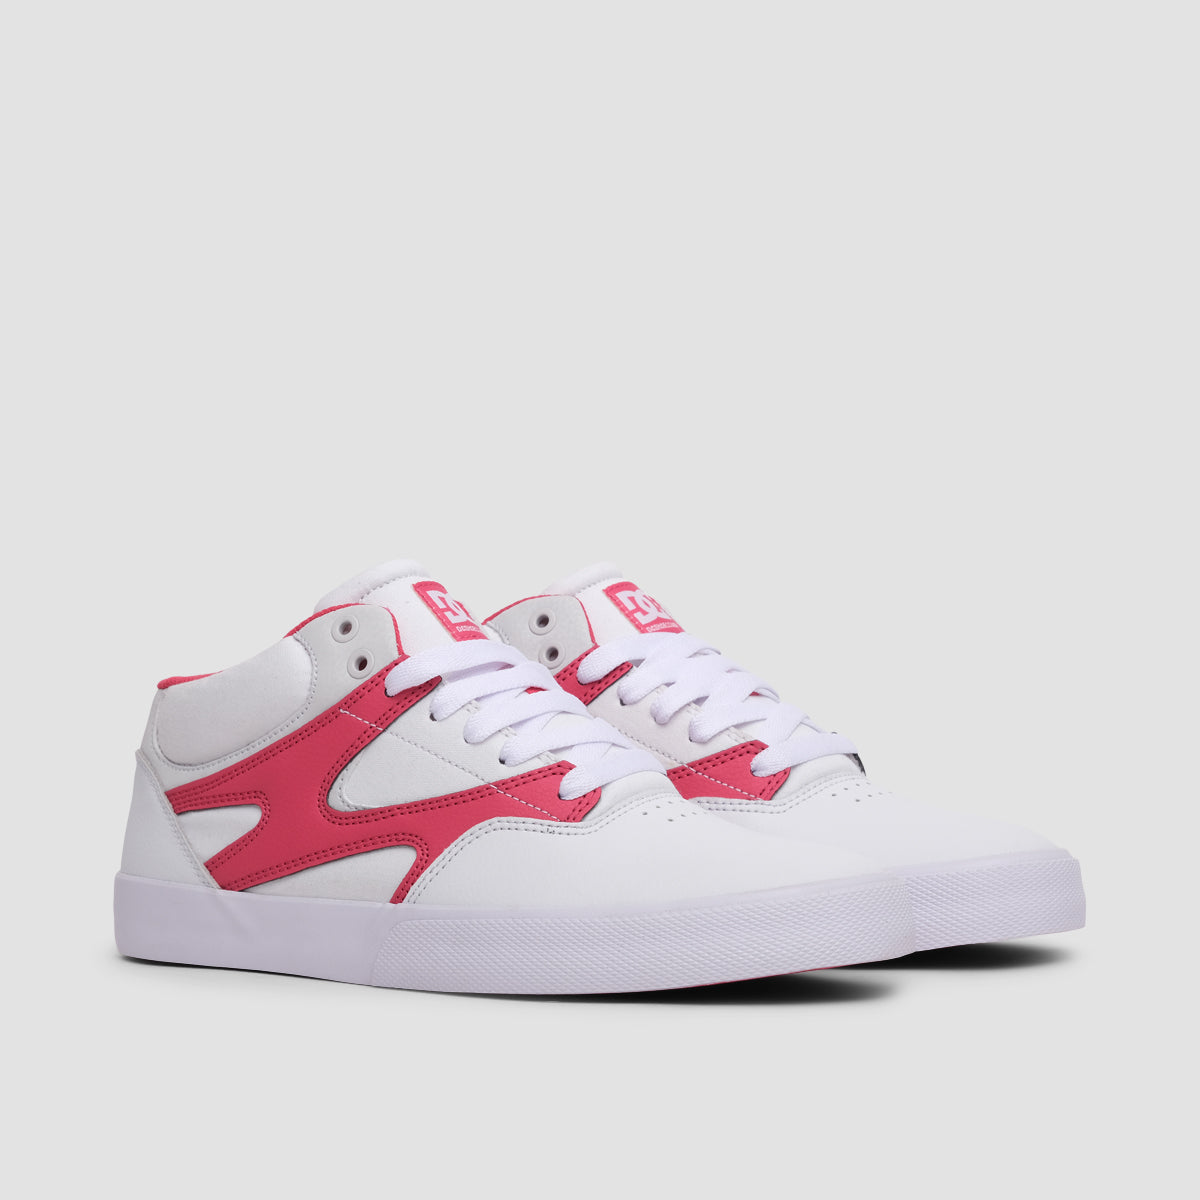 DC JK V Mid 0Waste Shoes - White/Grey/Red